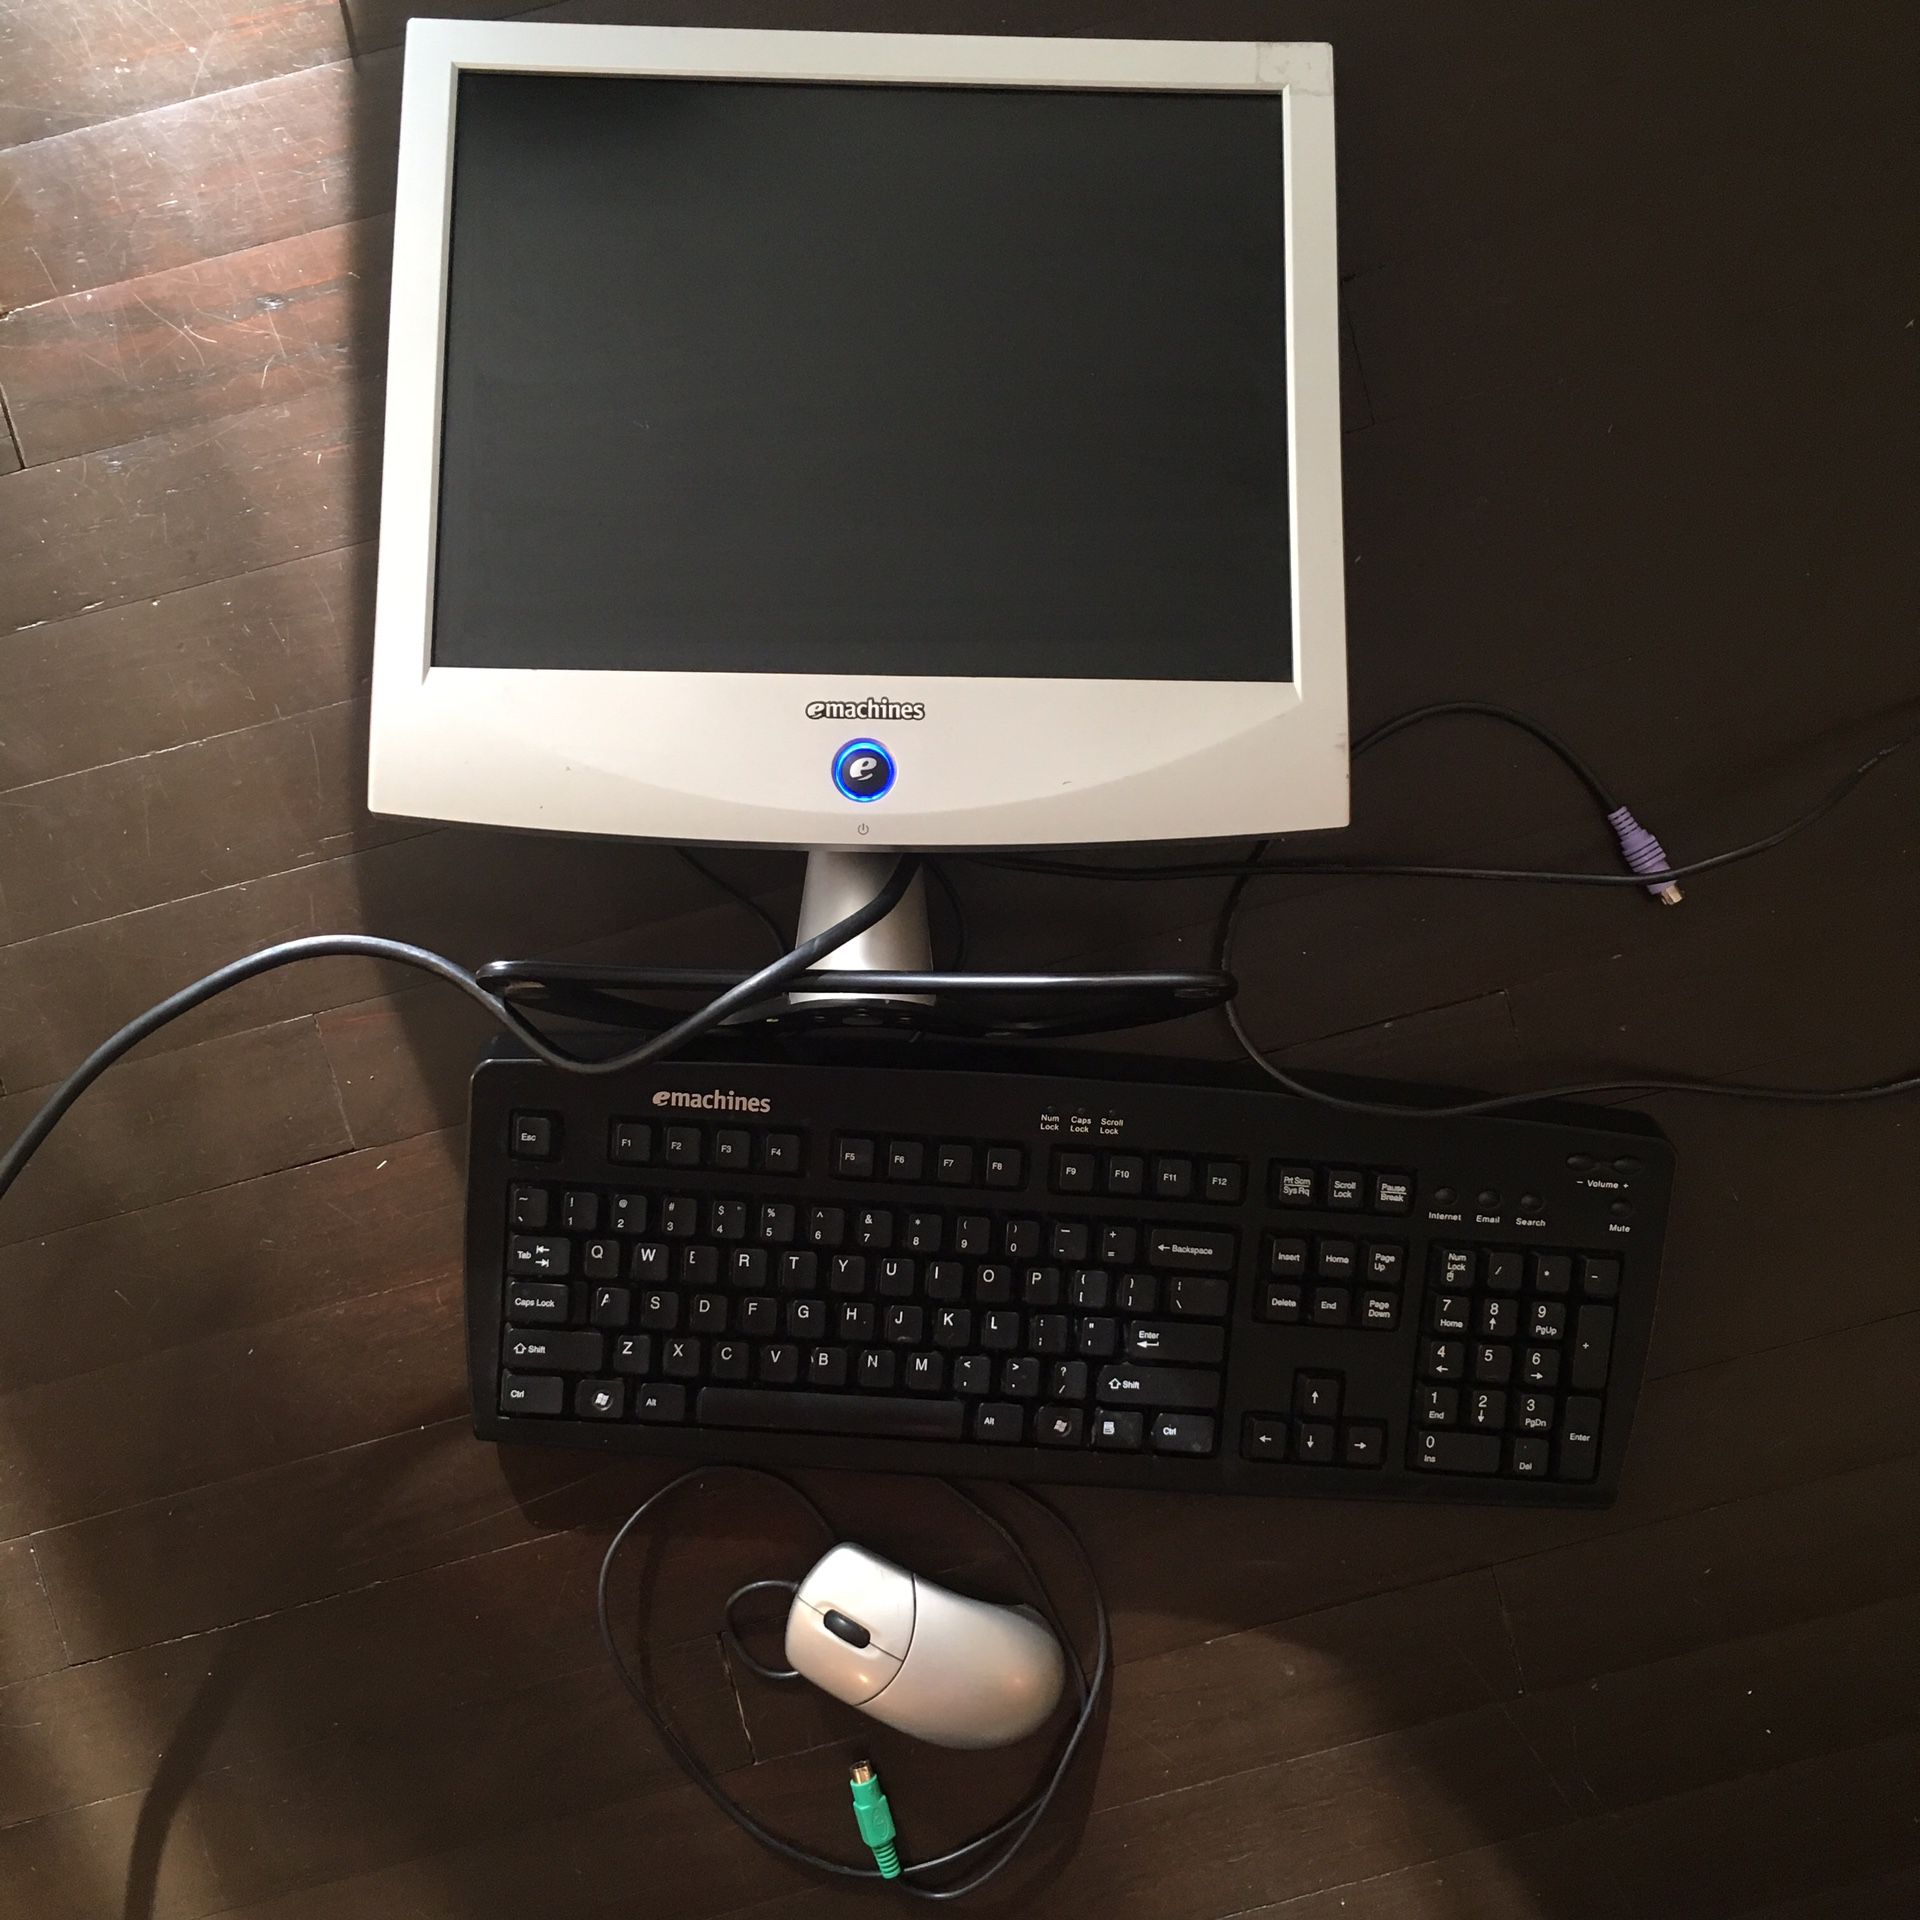 Display Monitor, Keyboard, Mouse